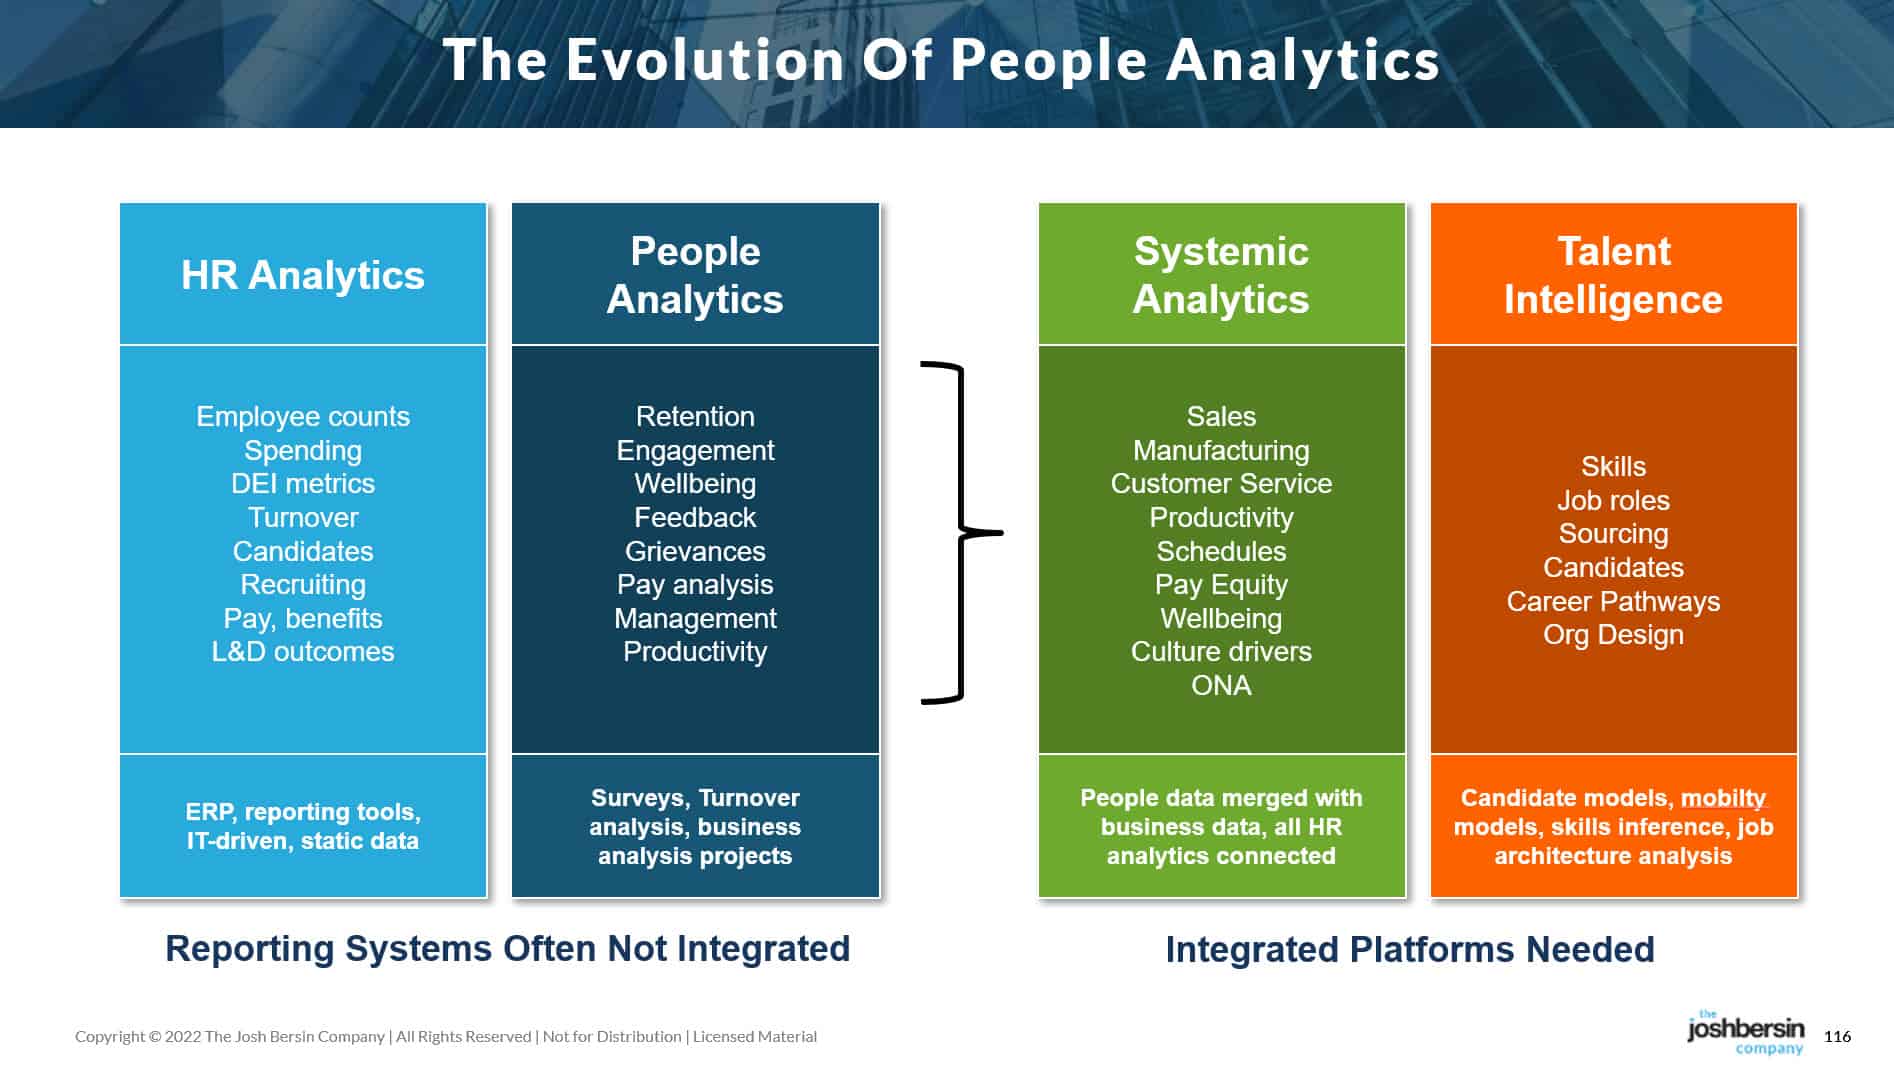 Evolution of People Analytics, The Josh Bersin Company